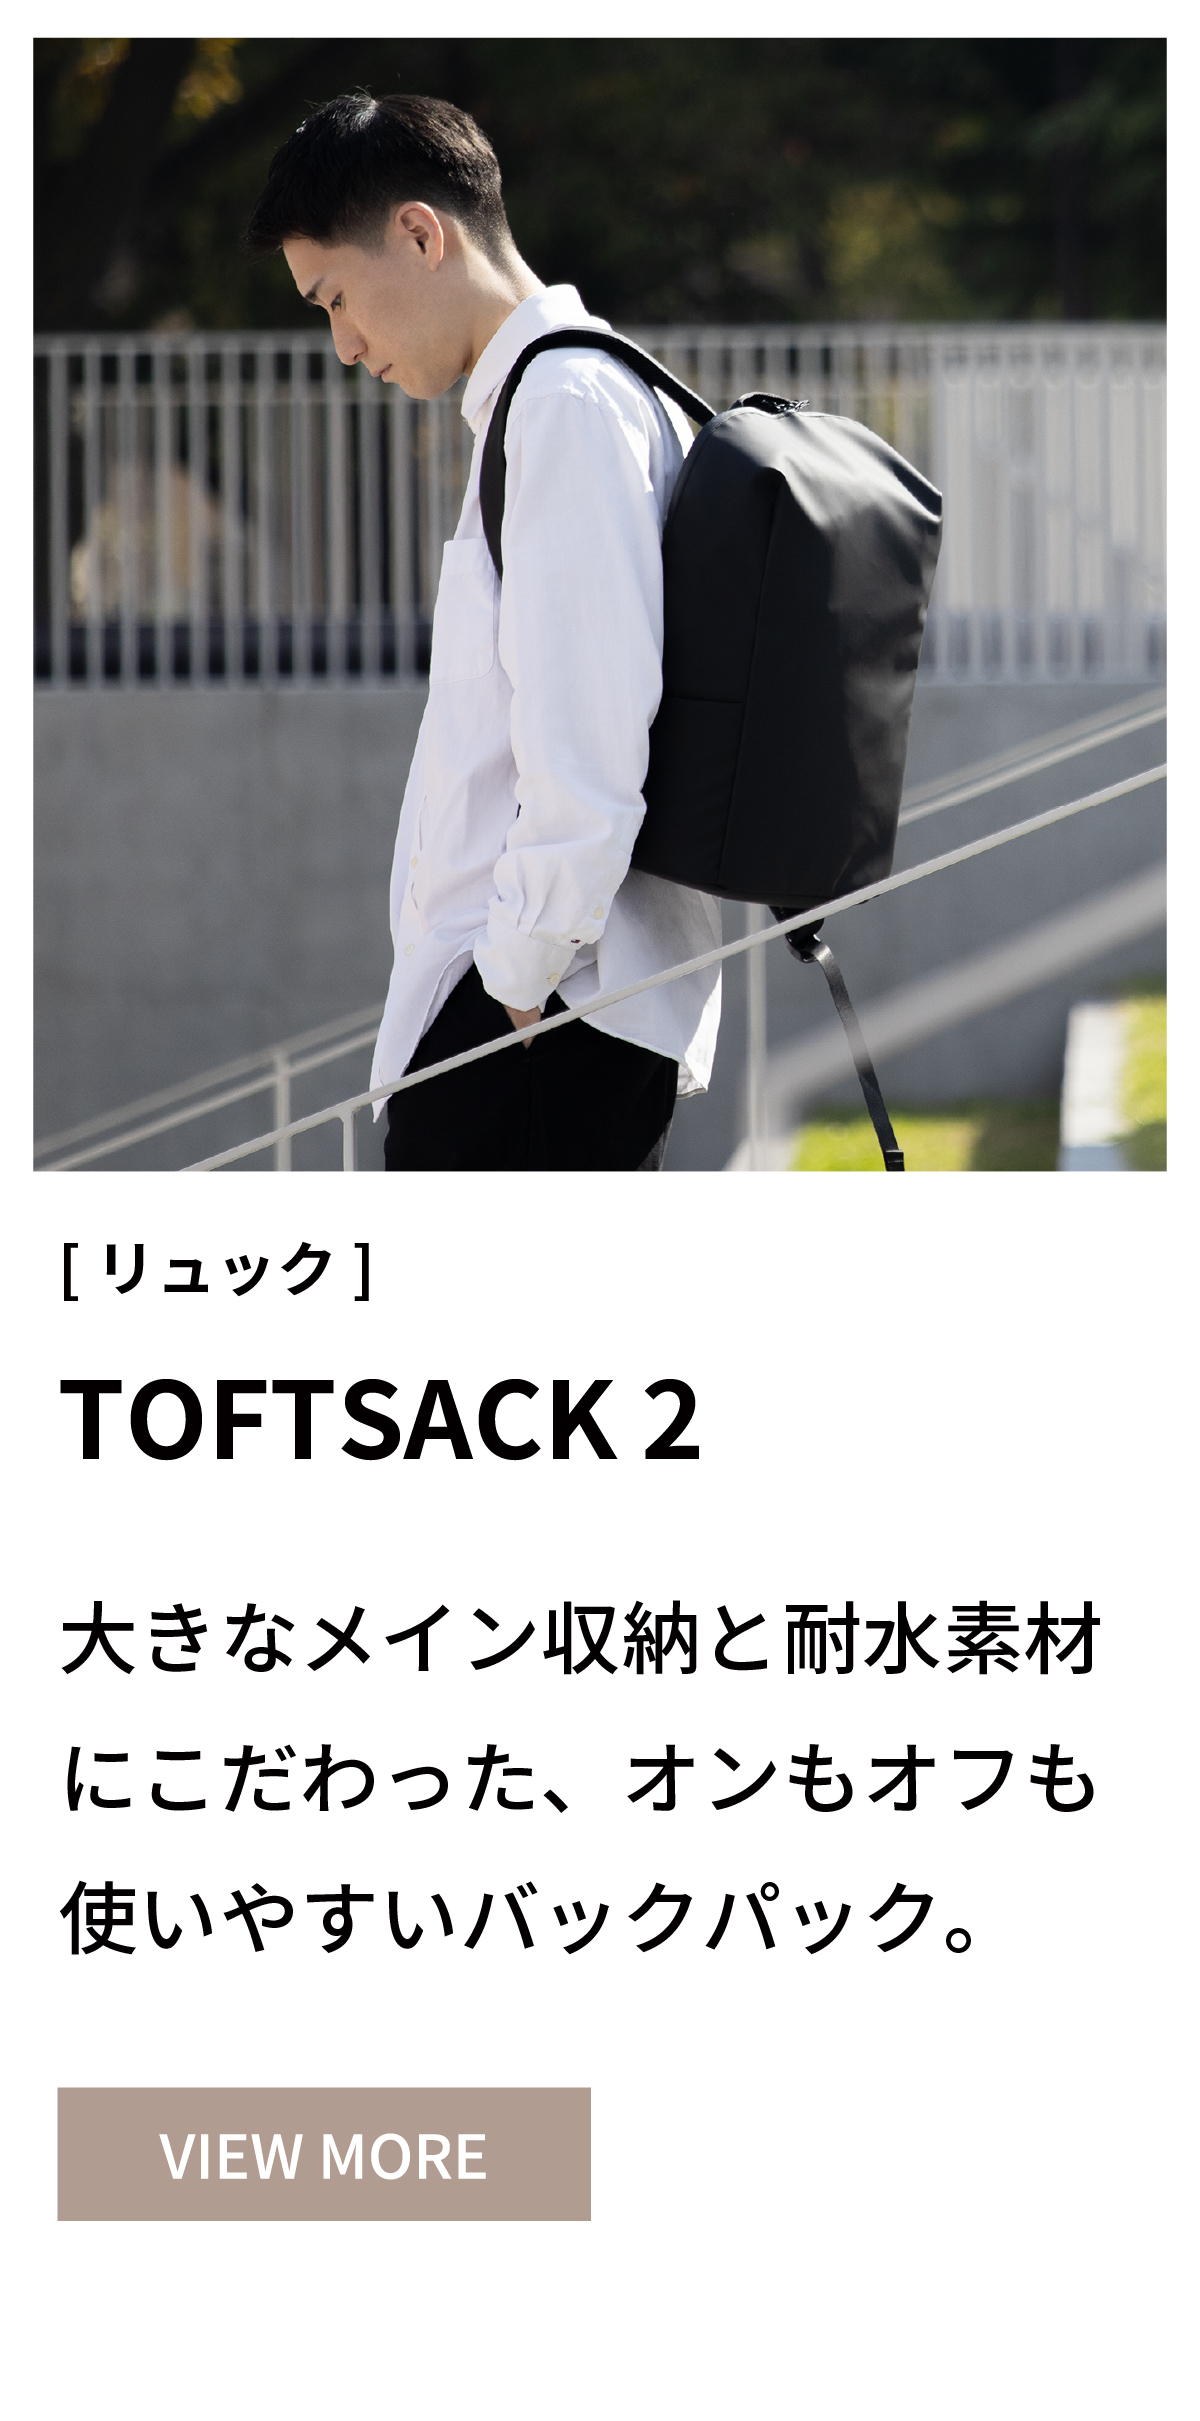 TOFTSACK2